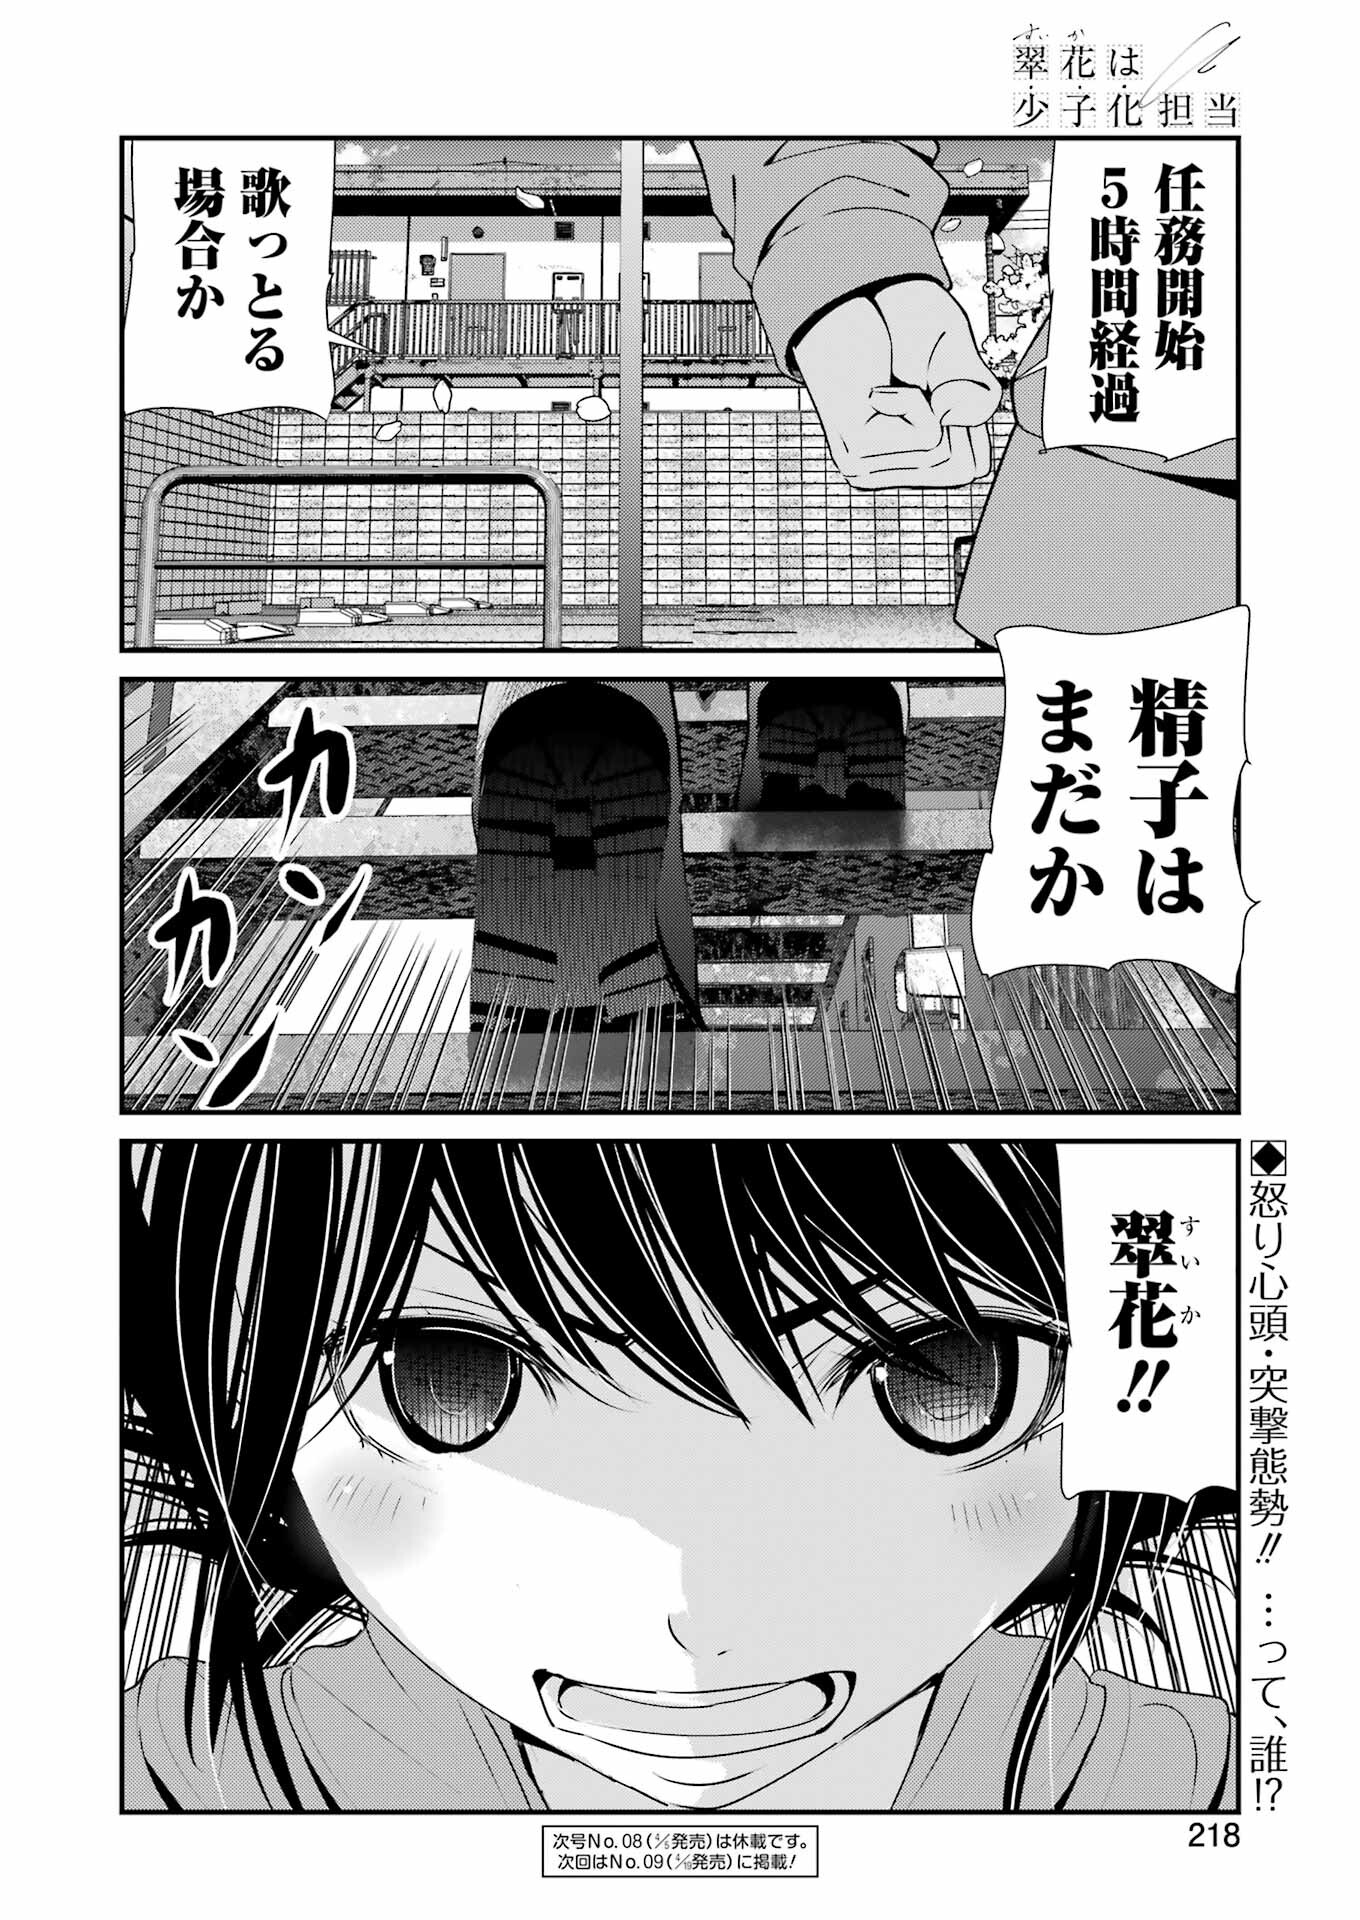 Suika wa Shoushika Tantou - Chapter 7 - Page 24